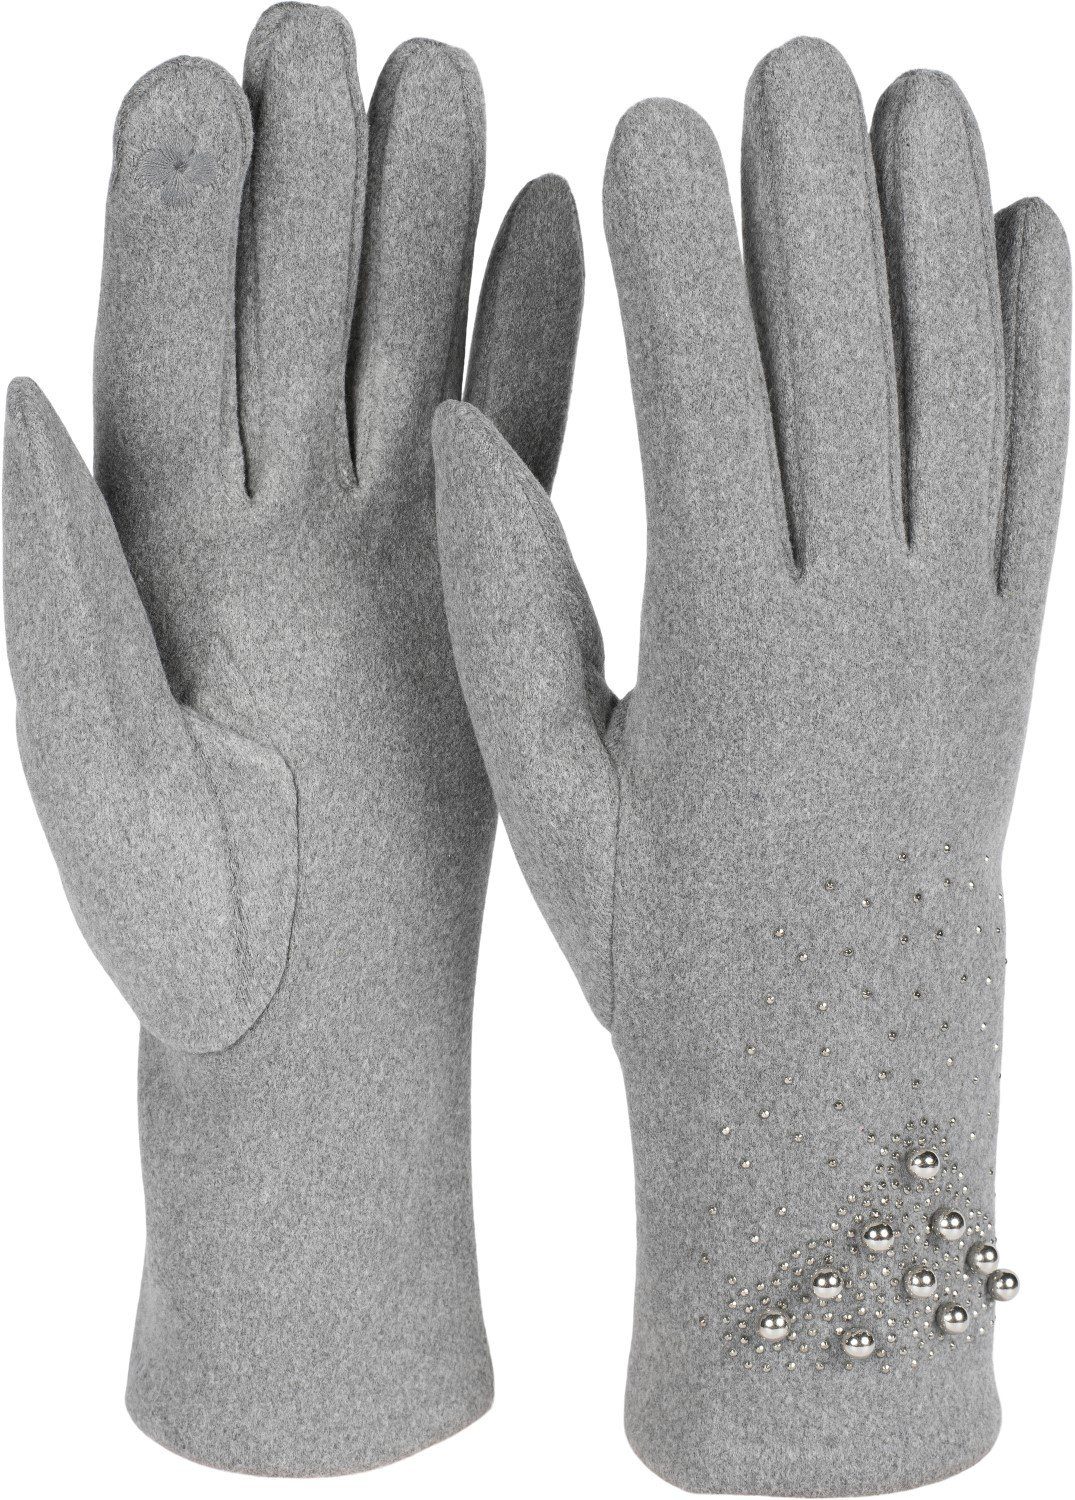 und Hellgrau styleBREAKER Strass Fleecehandschuhe Handschuhe Perlen mit Touchscreen